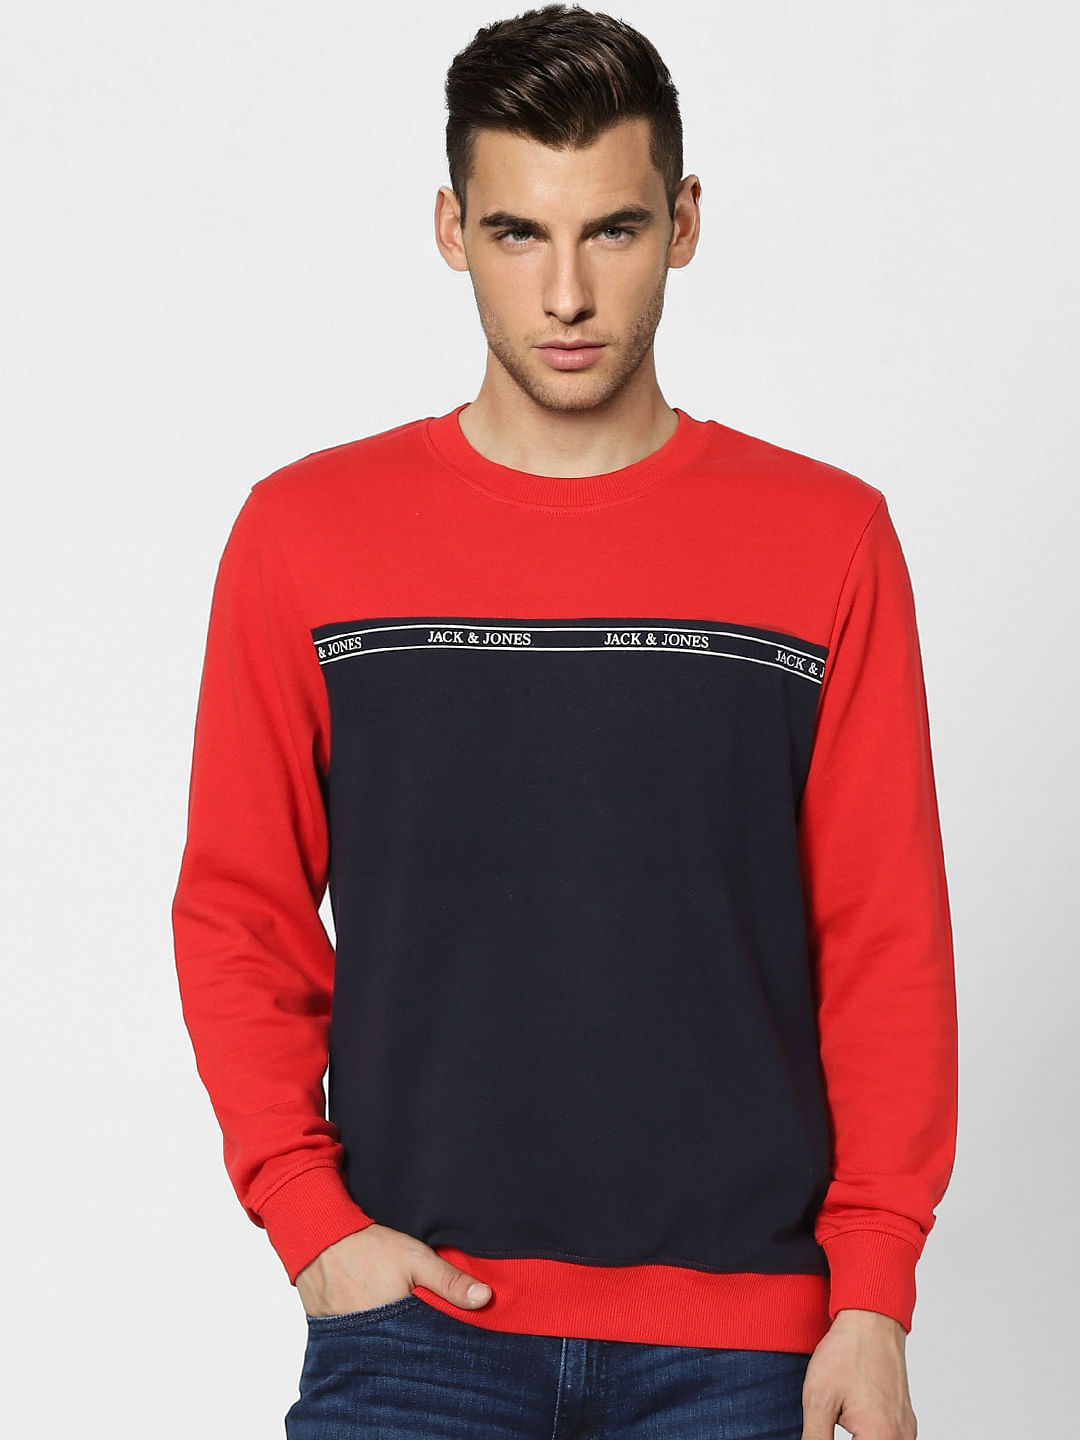 Jack & Jones sweatshirt MEN FASHION Jumpers & Sweatshirts Hoodie Brown XXL discount 56% 